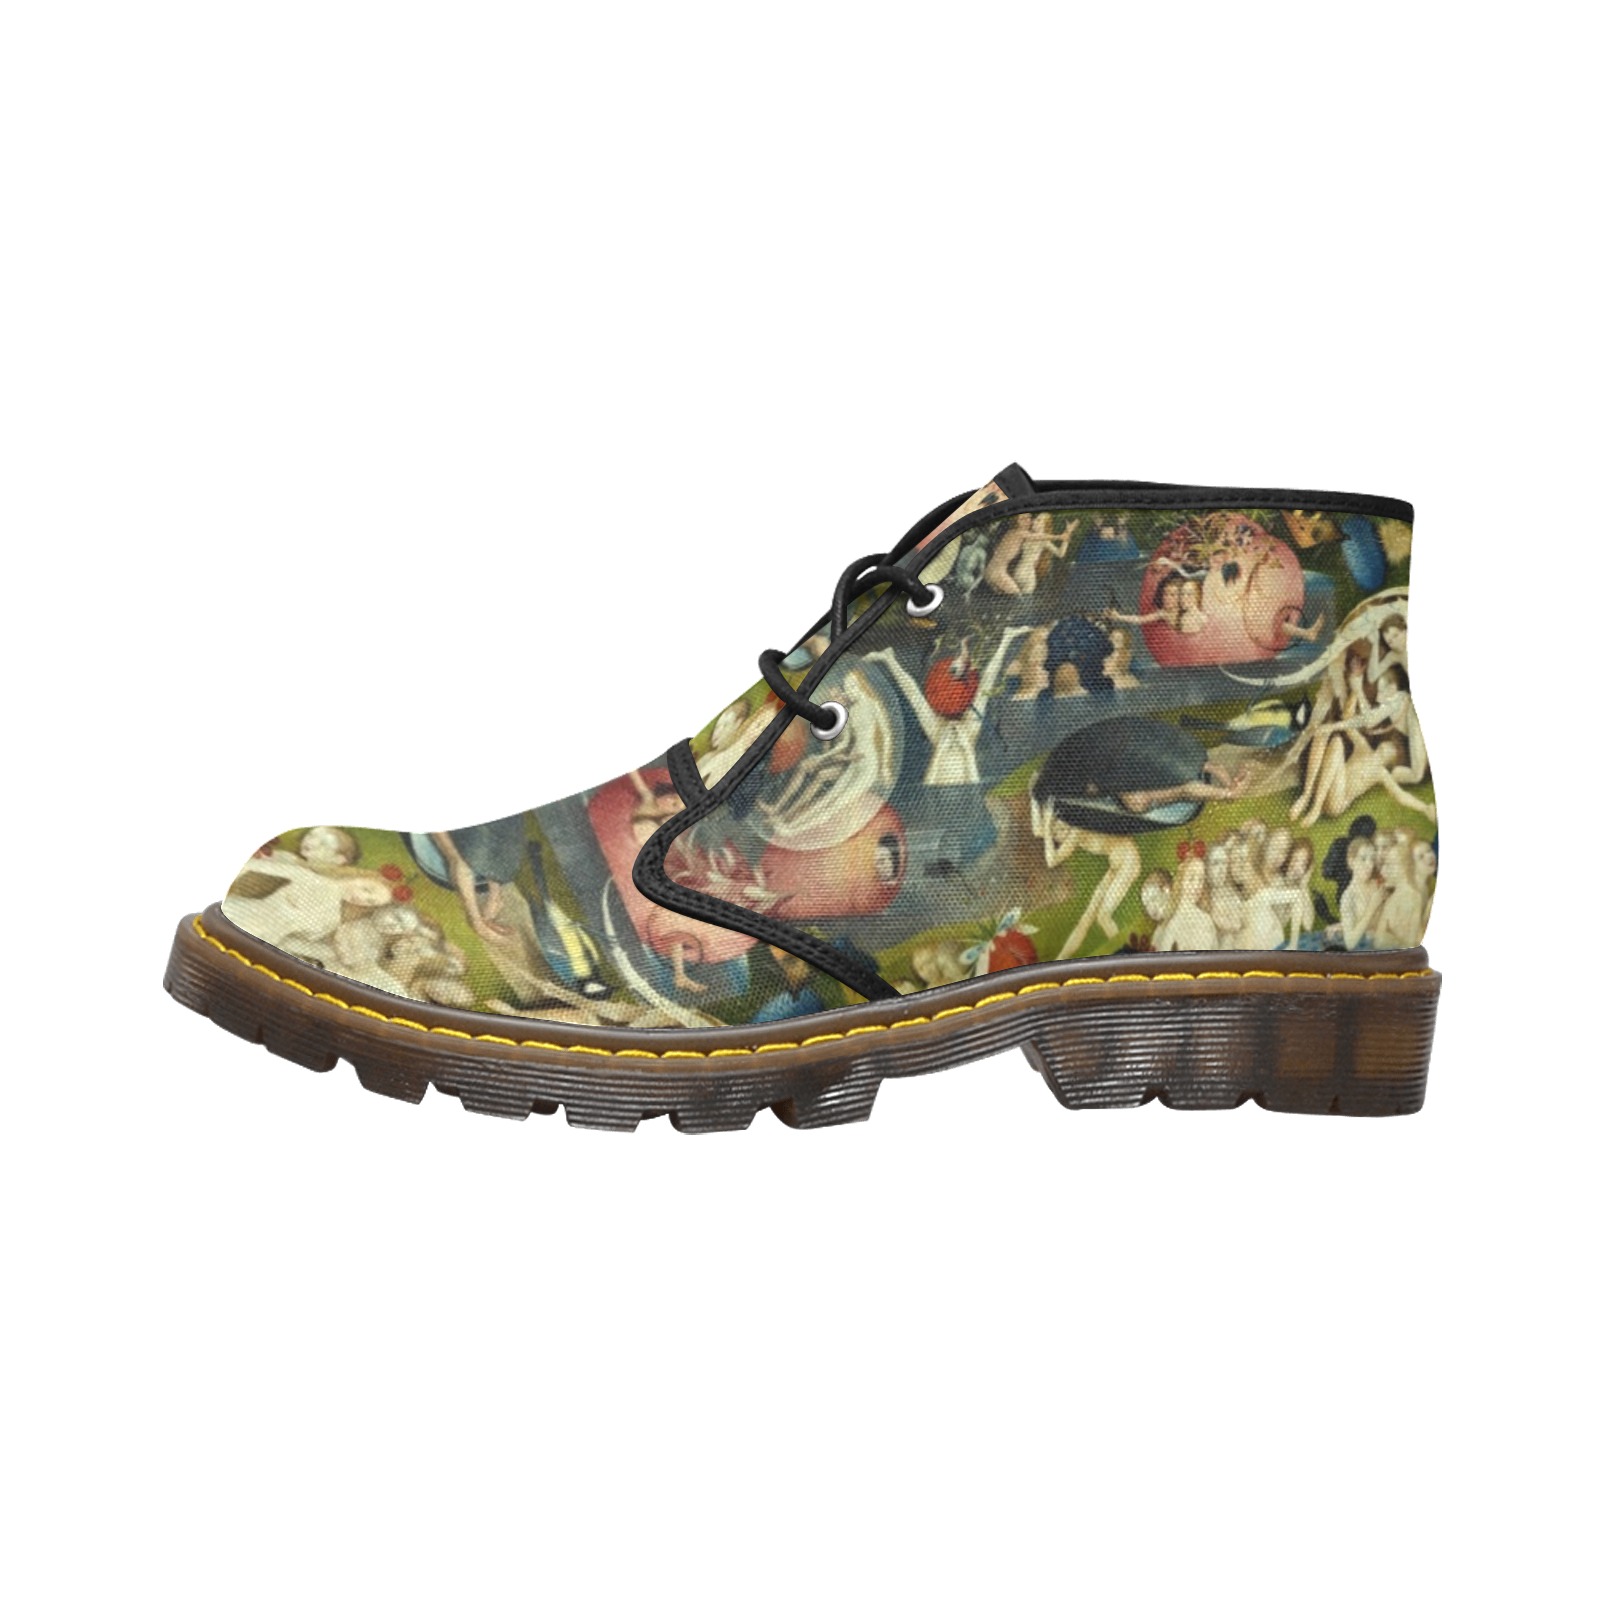 Garden of Earthly Delights 6 Men's Canvas Chukka Boots (Model 2402-1)